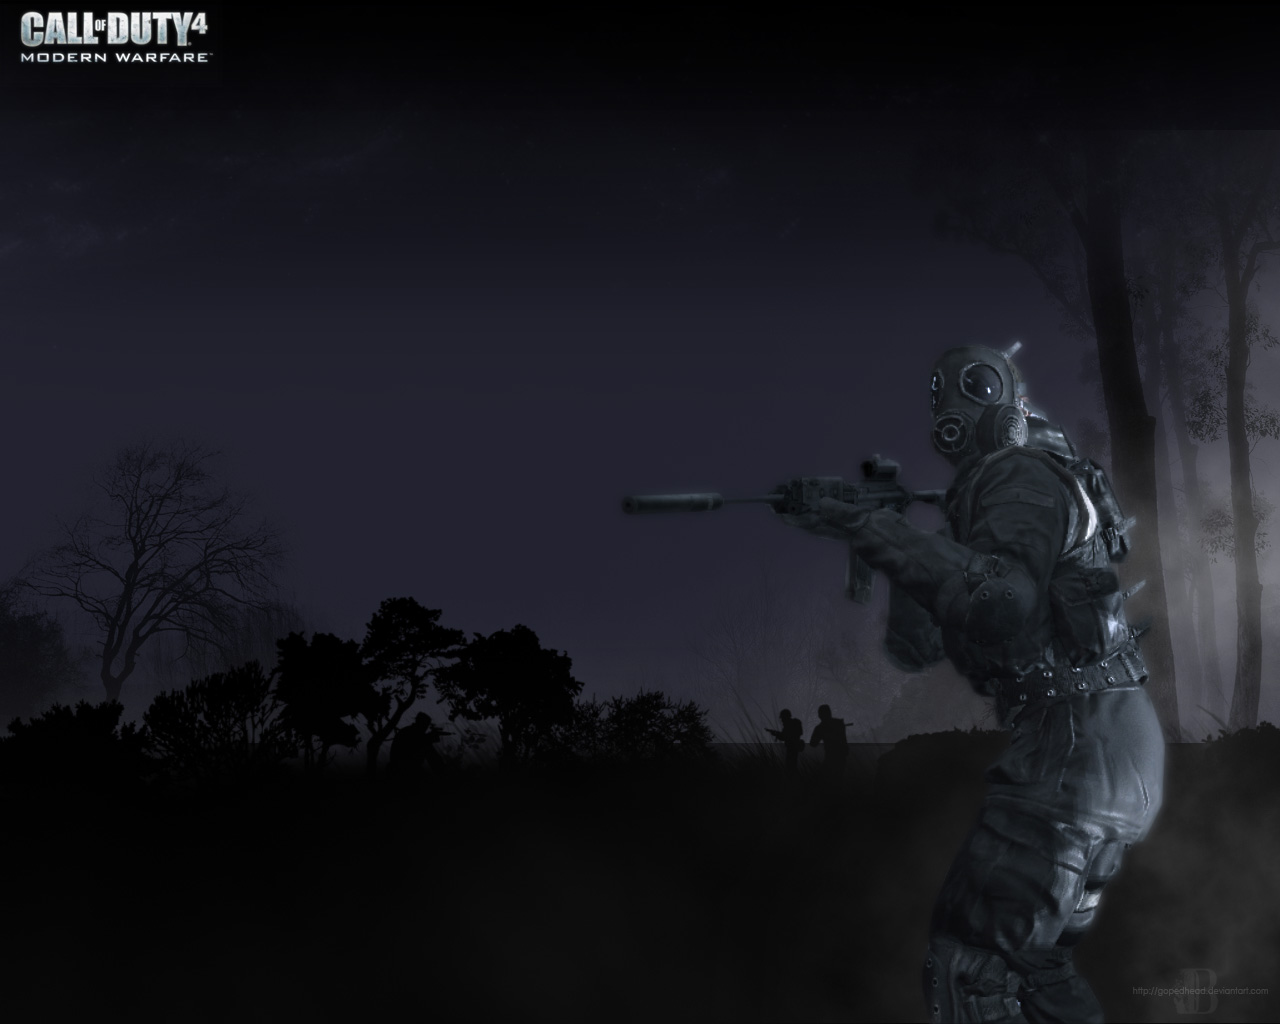 Call of Duty 4 Wallpaper by MichaelDebevec on DeviantArt